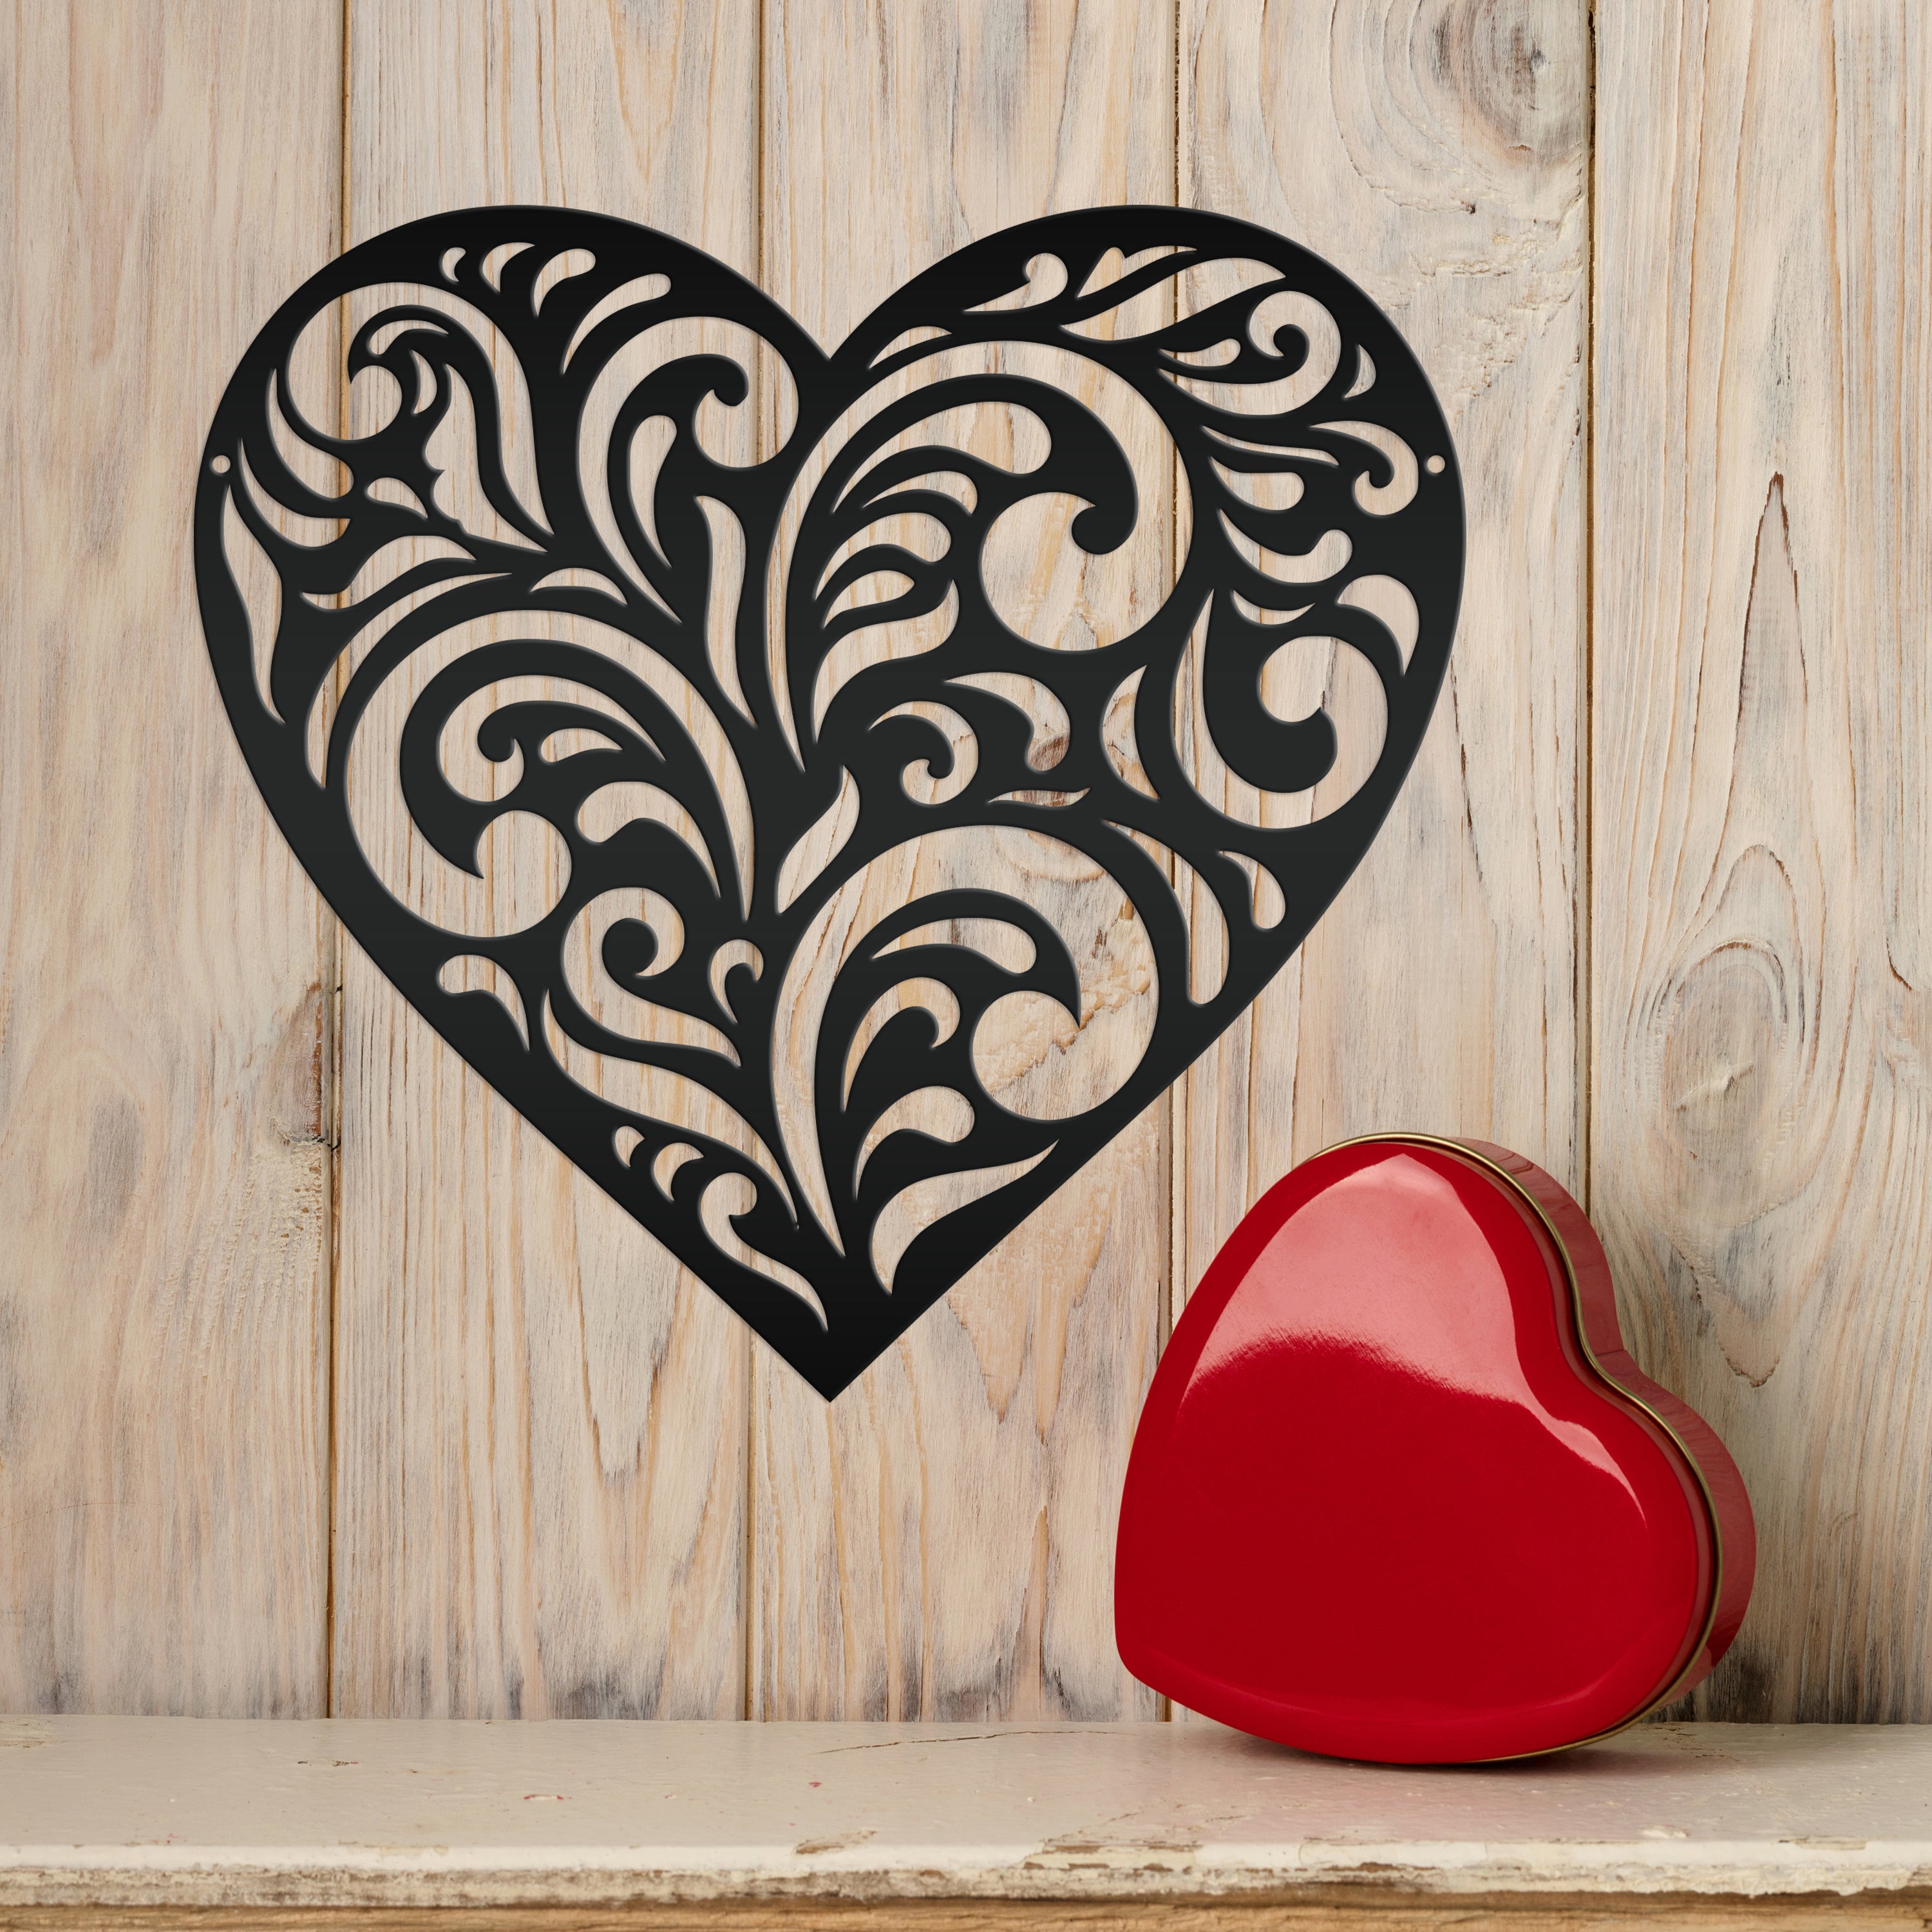 Metal Decorative Heart Sign - Valentine Decor - Paisley Heart Decor